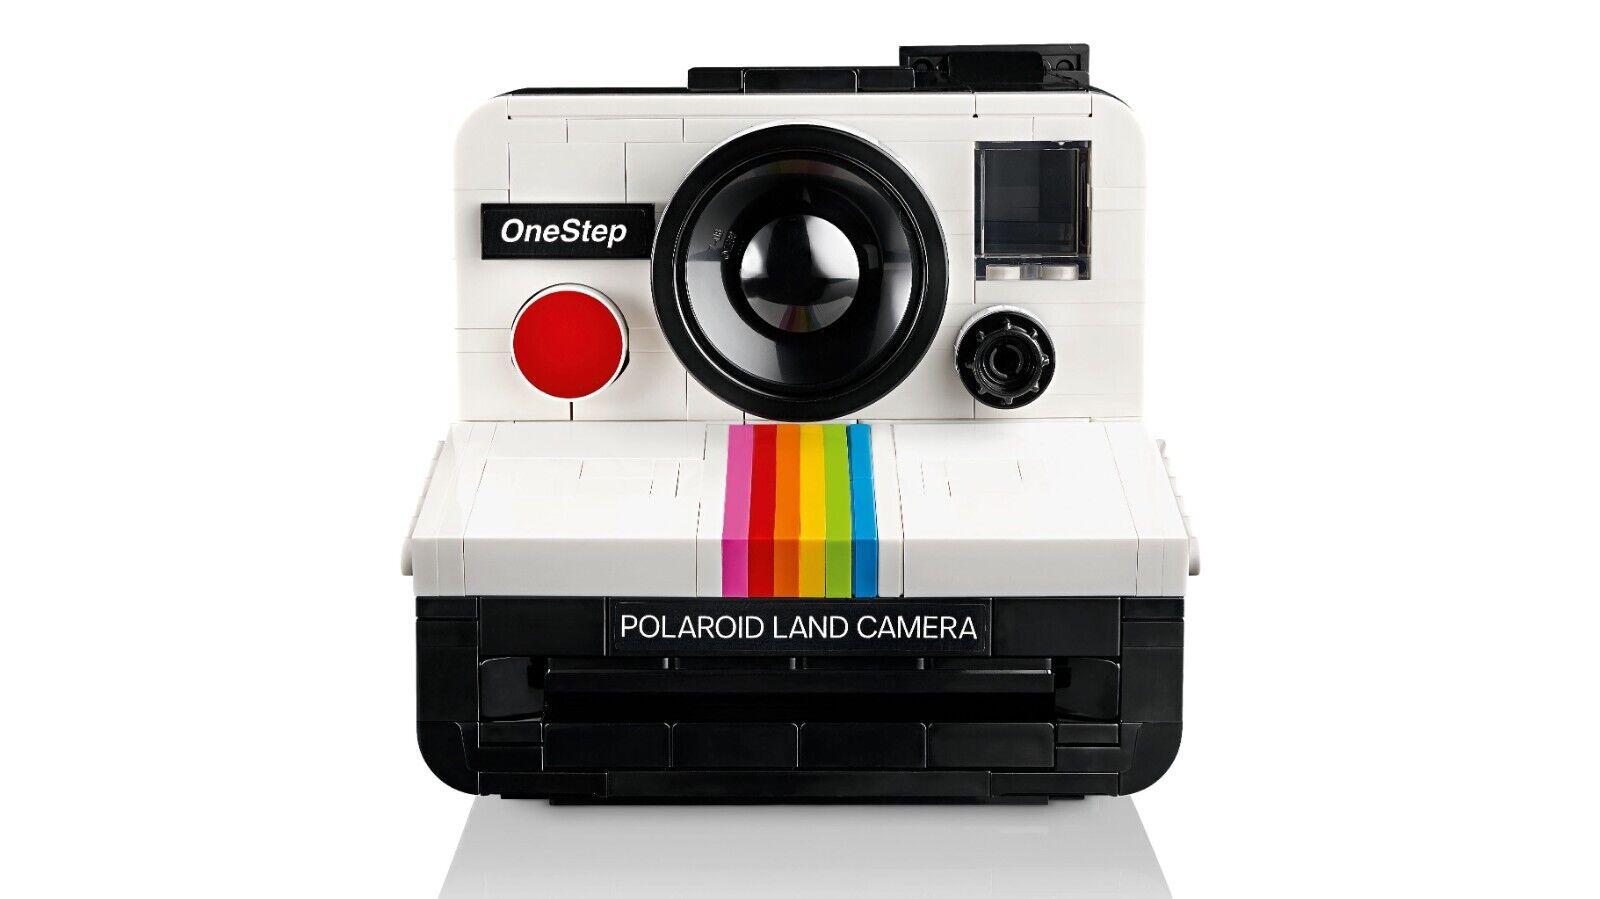 LEGO Ideas Polaroid OneStep SX-70 Camera 21345